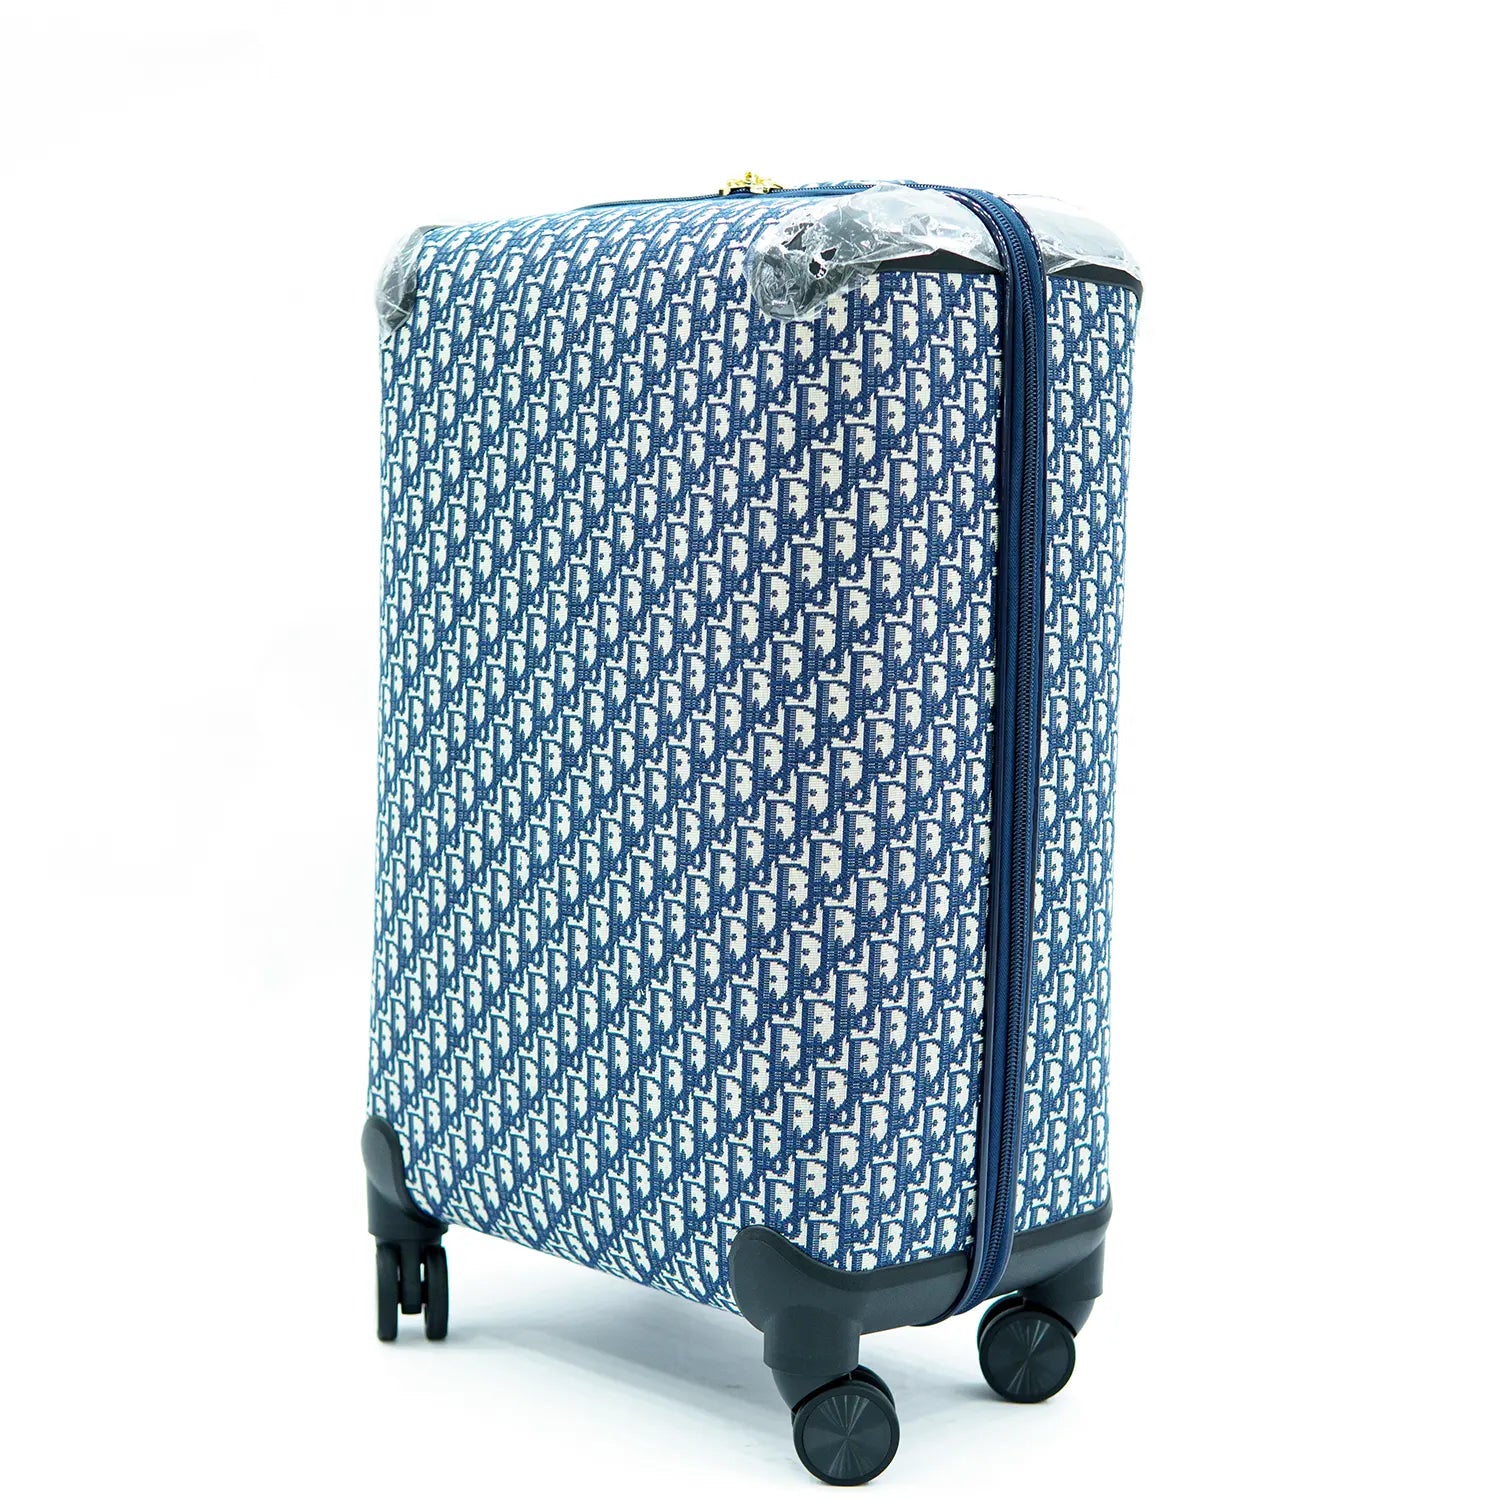 Journey in Luxury: Best-in-Class Suitcase for Effortless Traveling